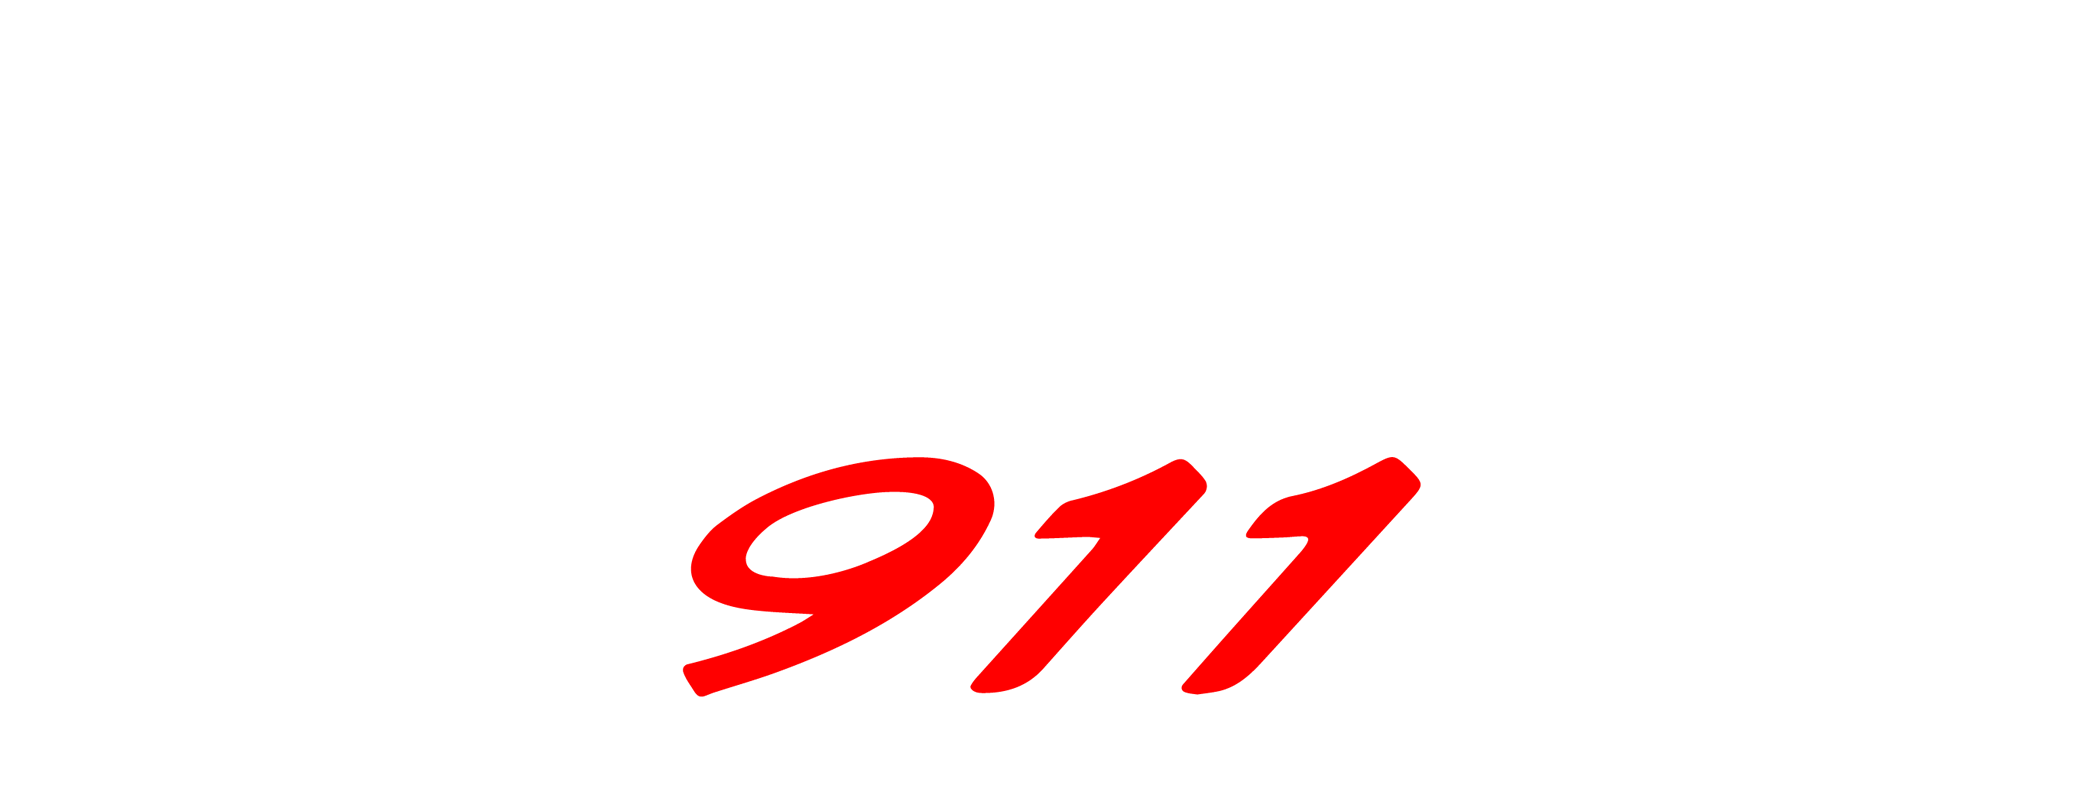 logo ufabet911